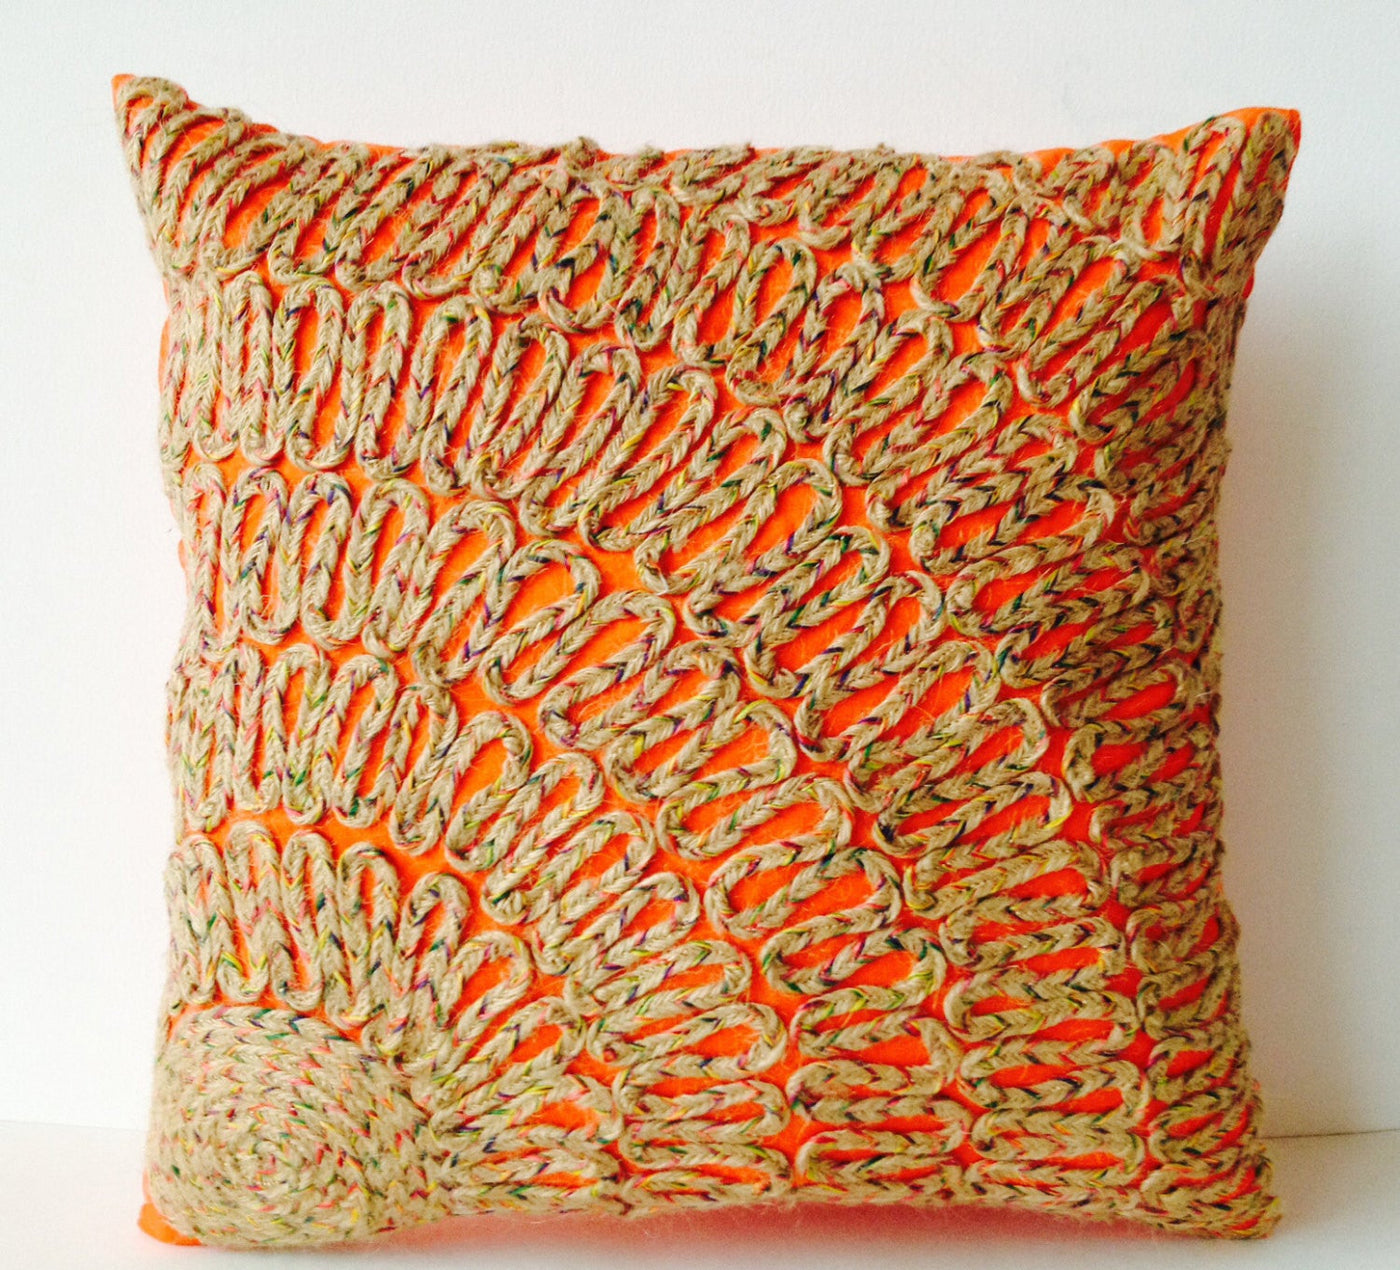 Throw Pillows -Orange Tan Dori Pillows -Burlap Pillow -Burlap Embroidered Orange Silk Pillows -Decorative Pillows -Tan Cushion -Gift -18x18 by Amore Beauté